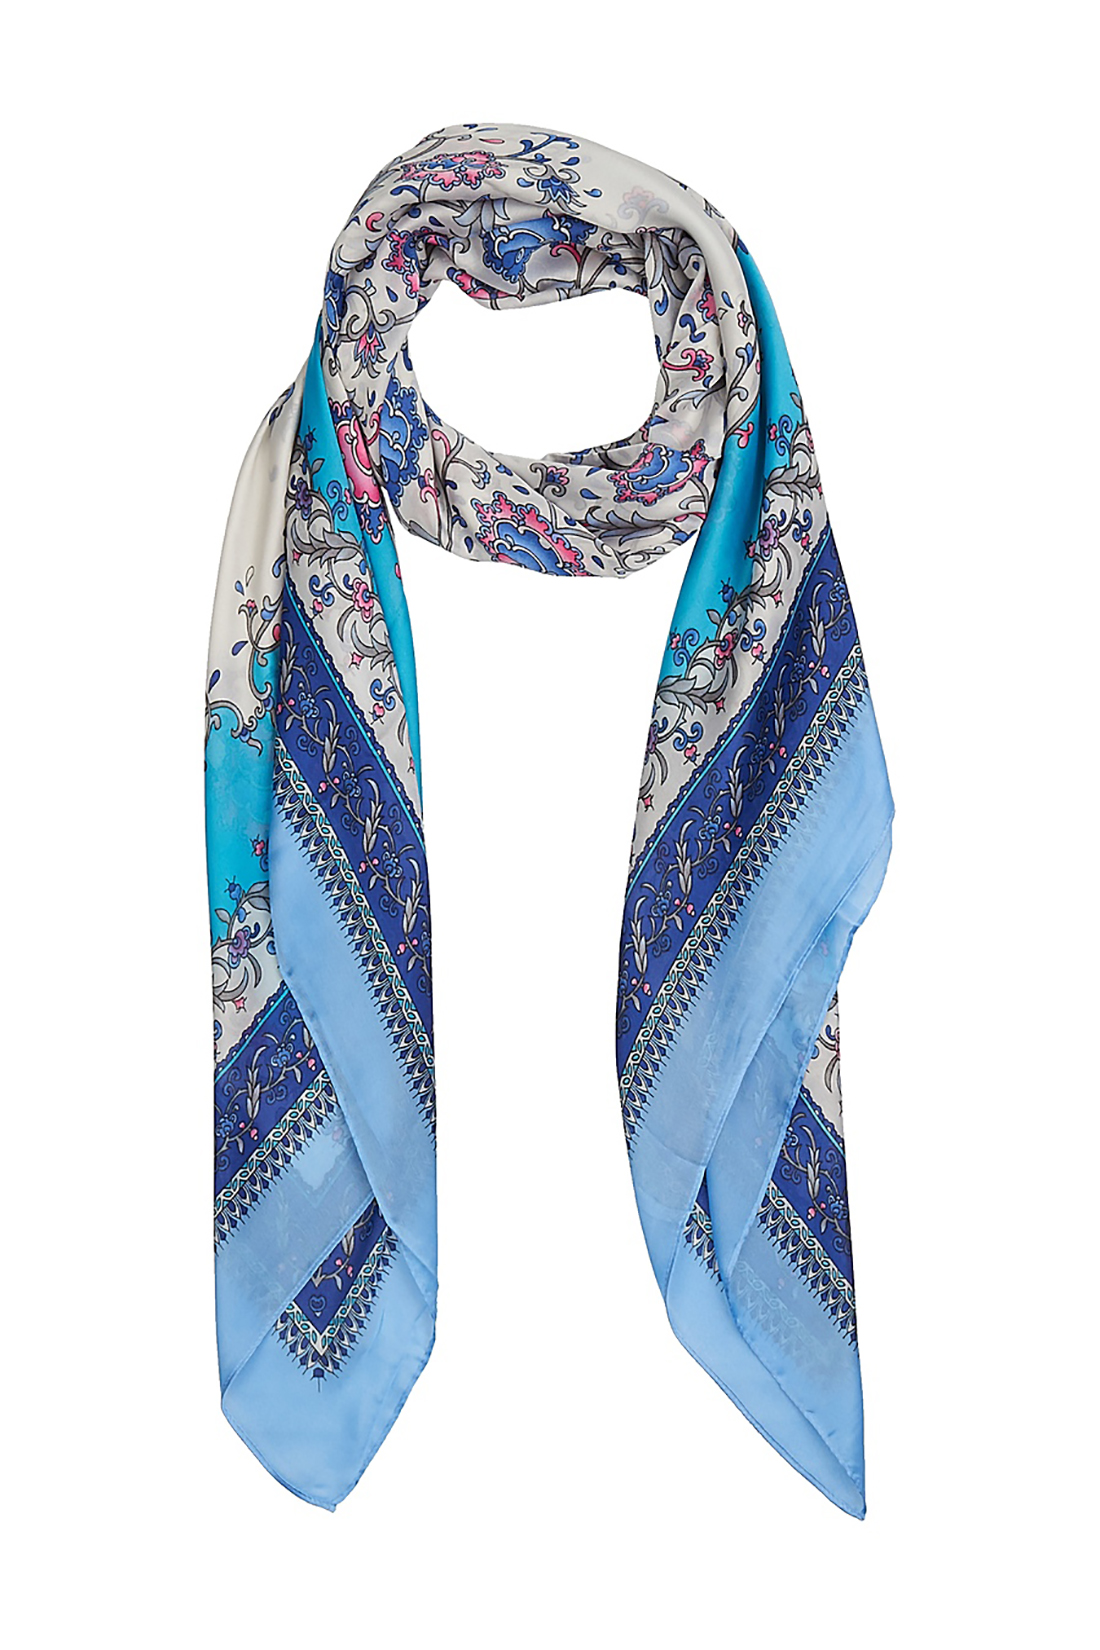 Шёлковый шарф с узором (арт. baon B358048), размер Без/раз, цвет angel blue printed#голубой Шёлковый шарф с узором (арт. baon B358048) - фото 1